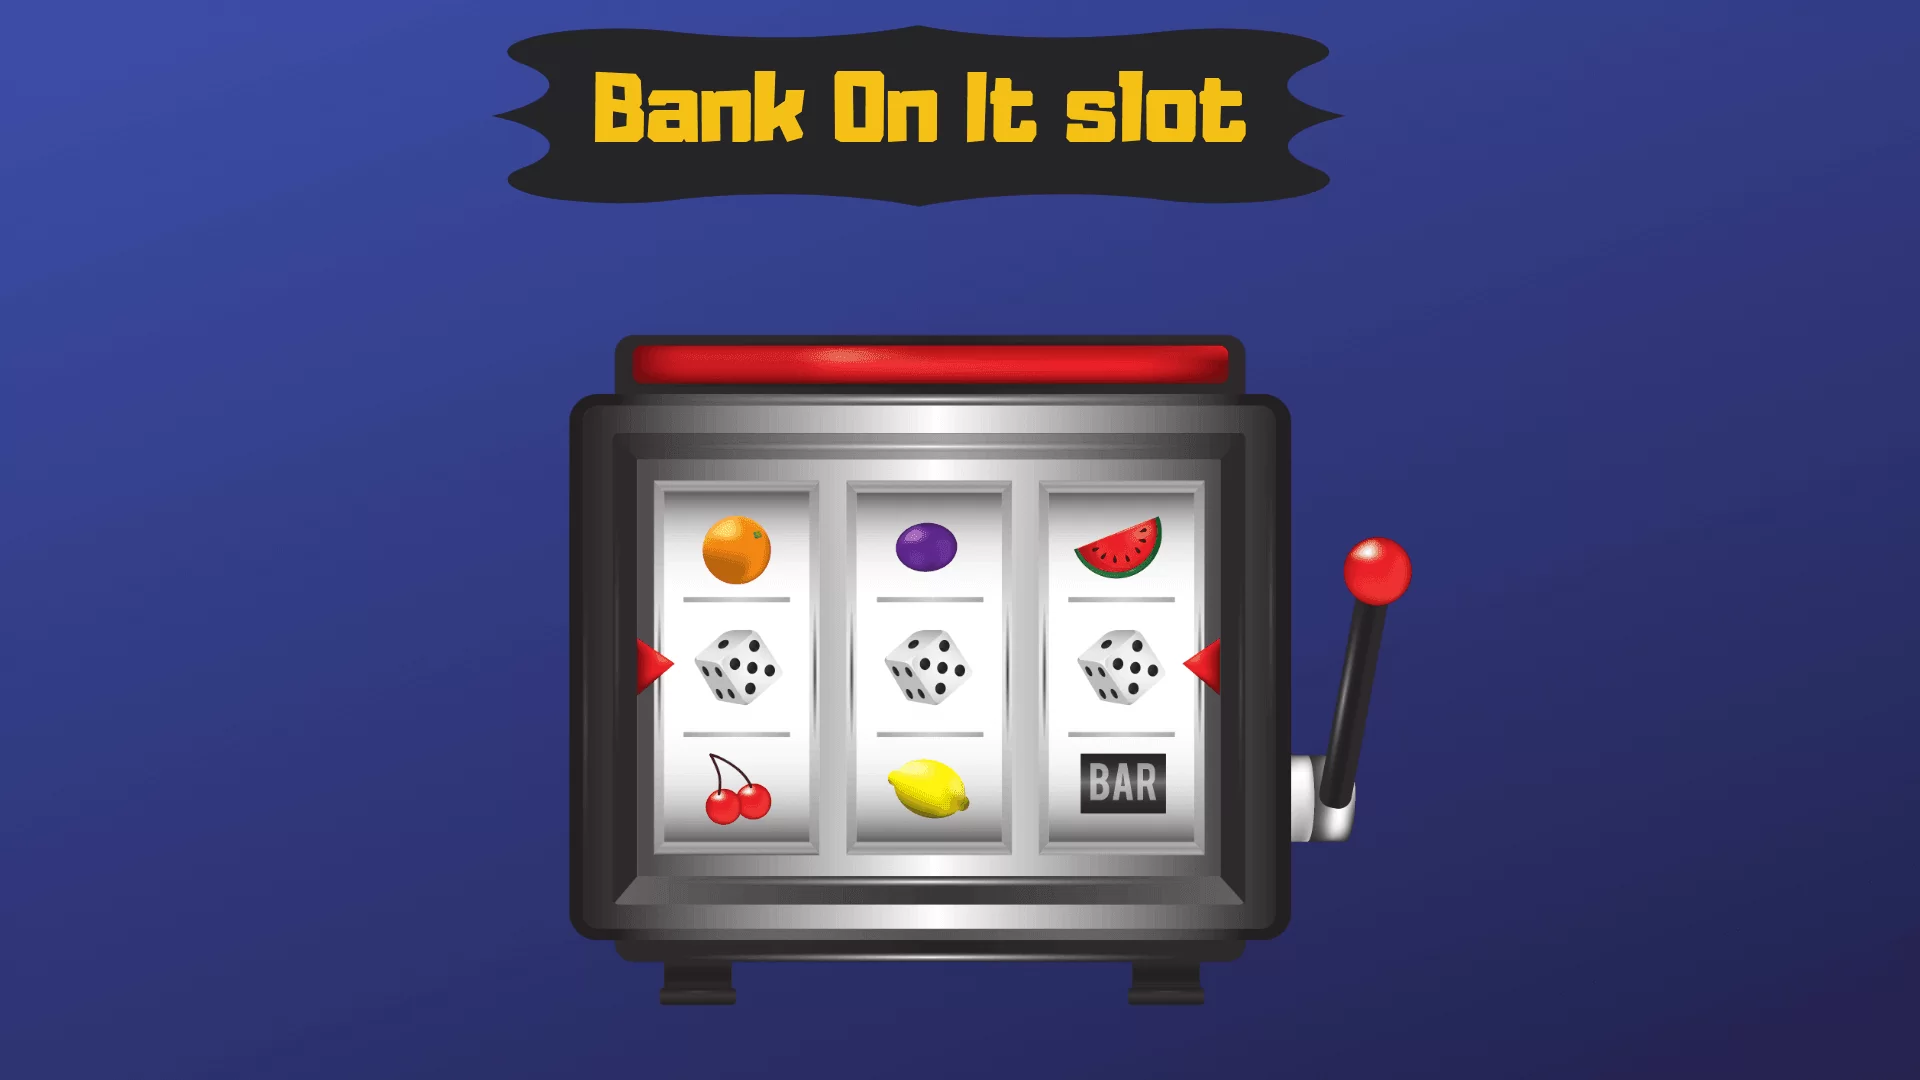 Bank On It slot